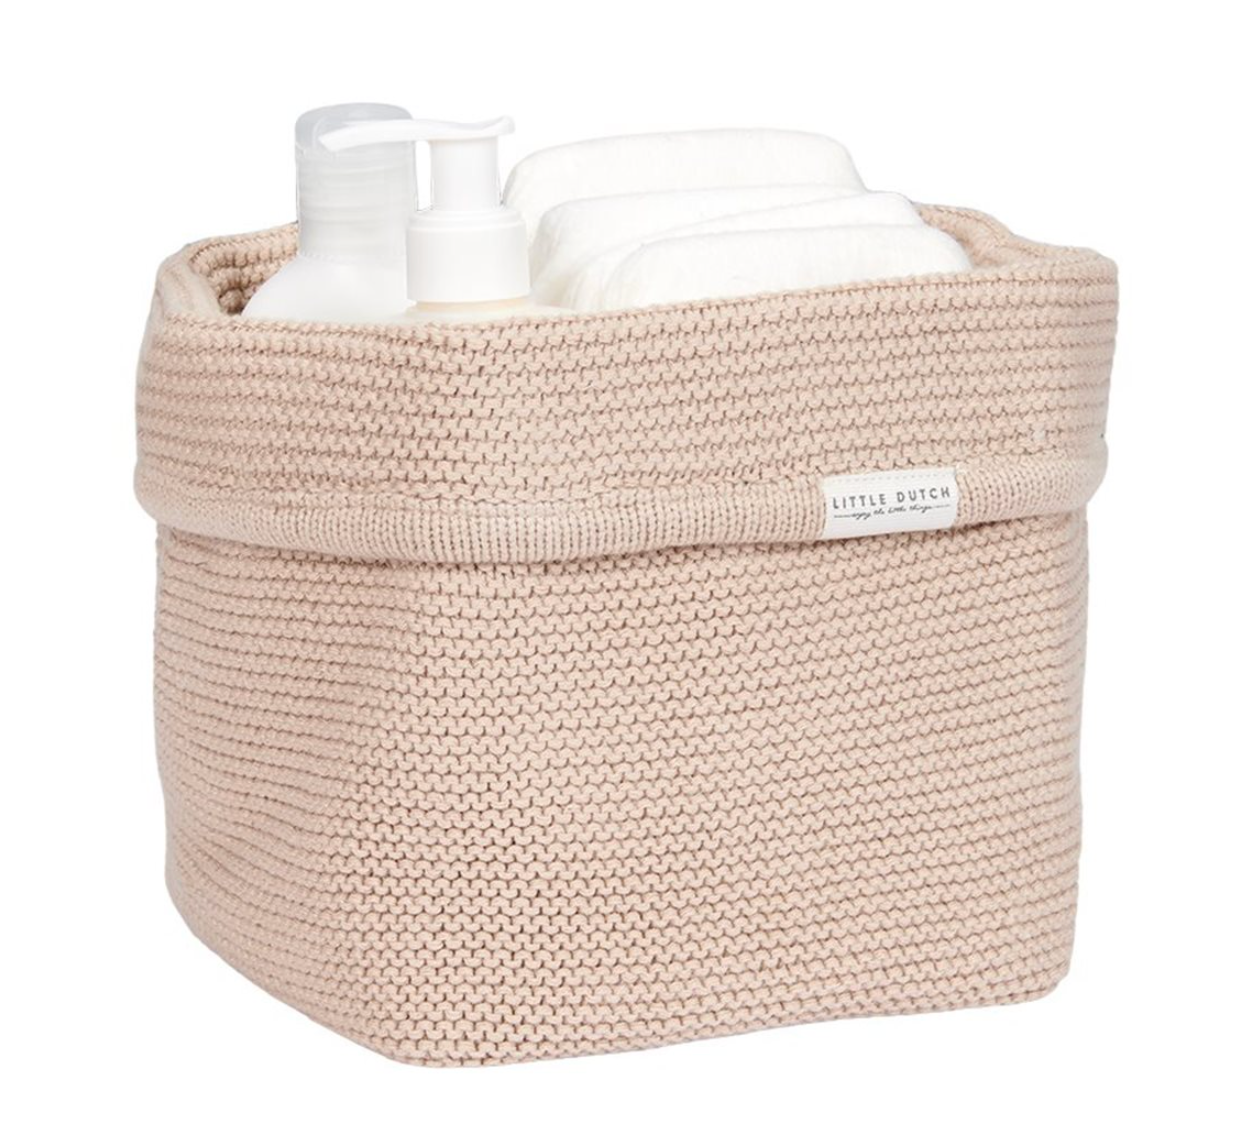 Small Beige knitted toiletry basket - Little dutch